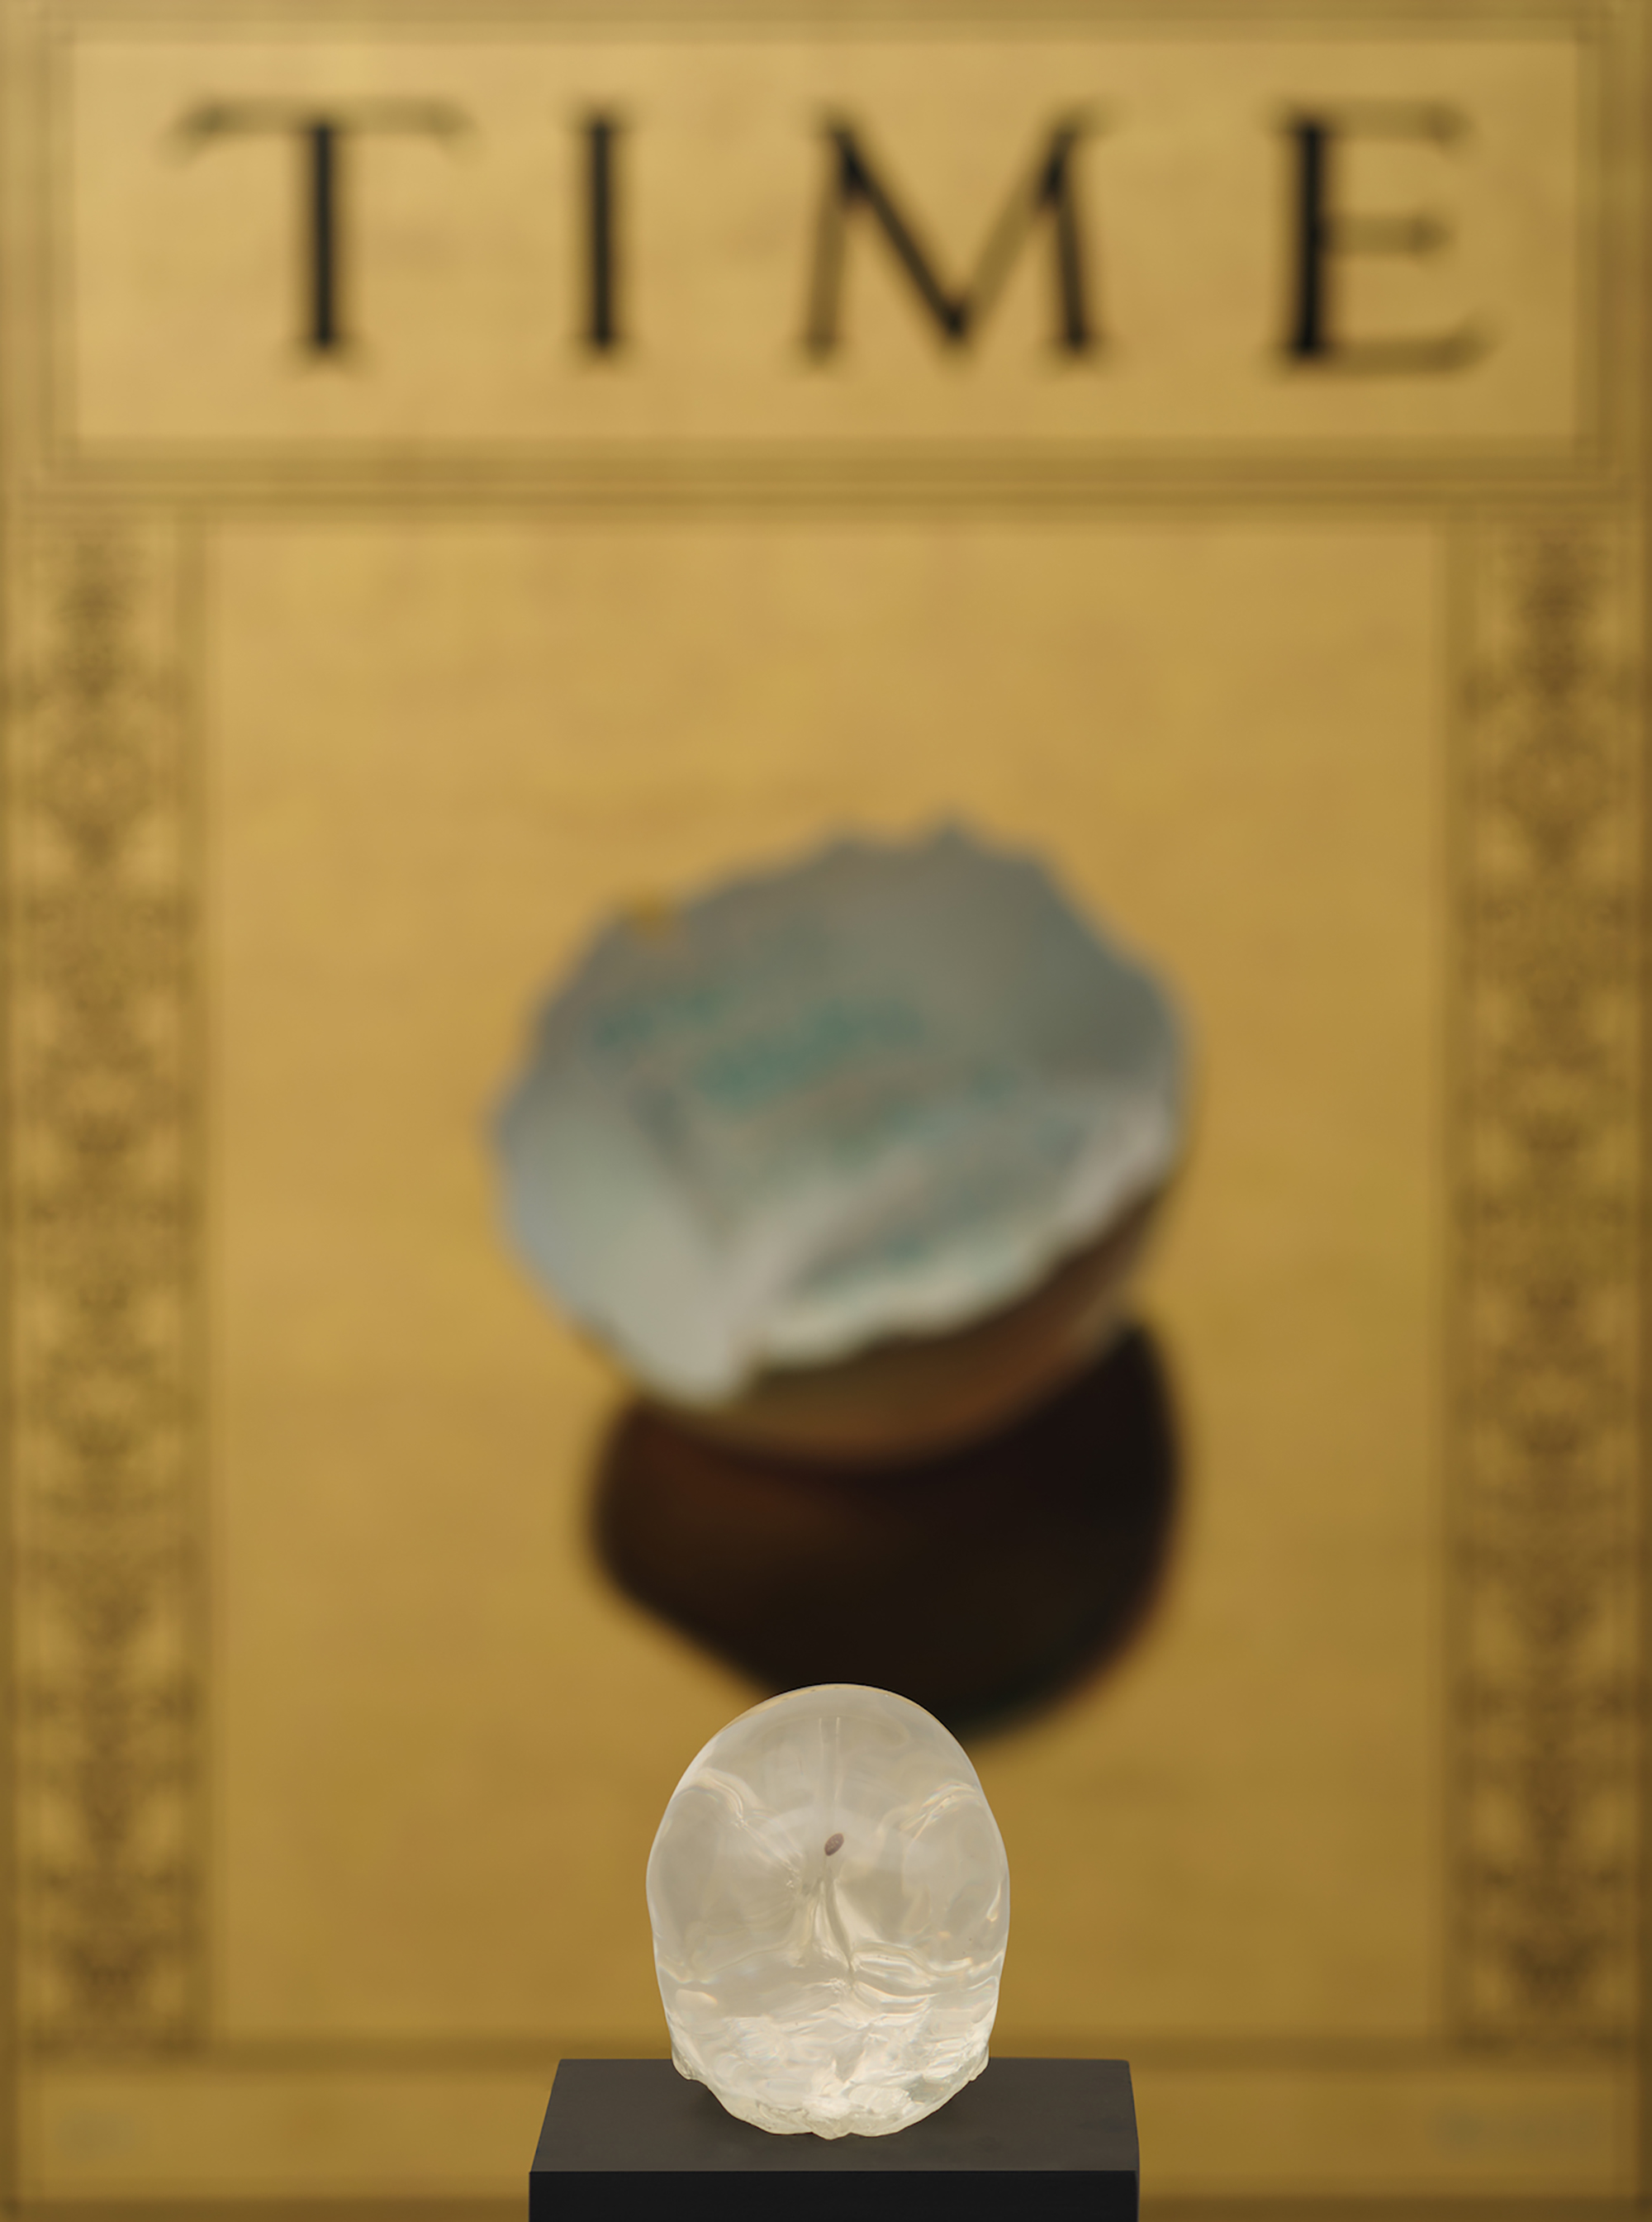 TIME, Liu Ren 刘任, 2018